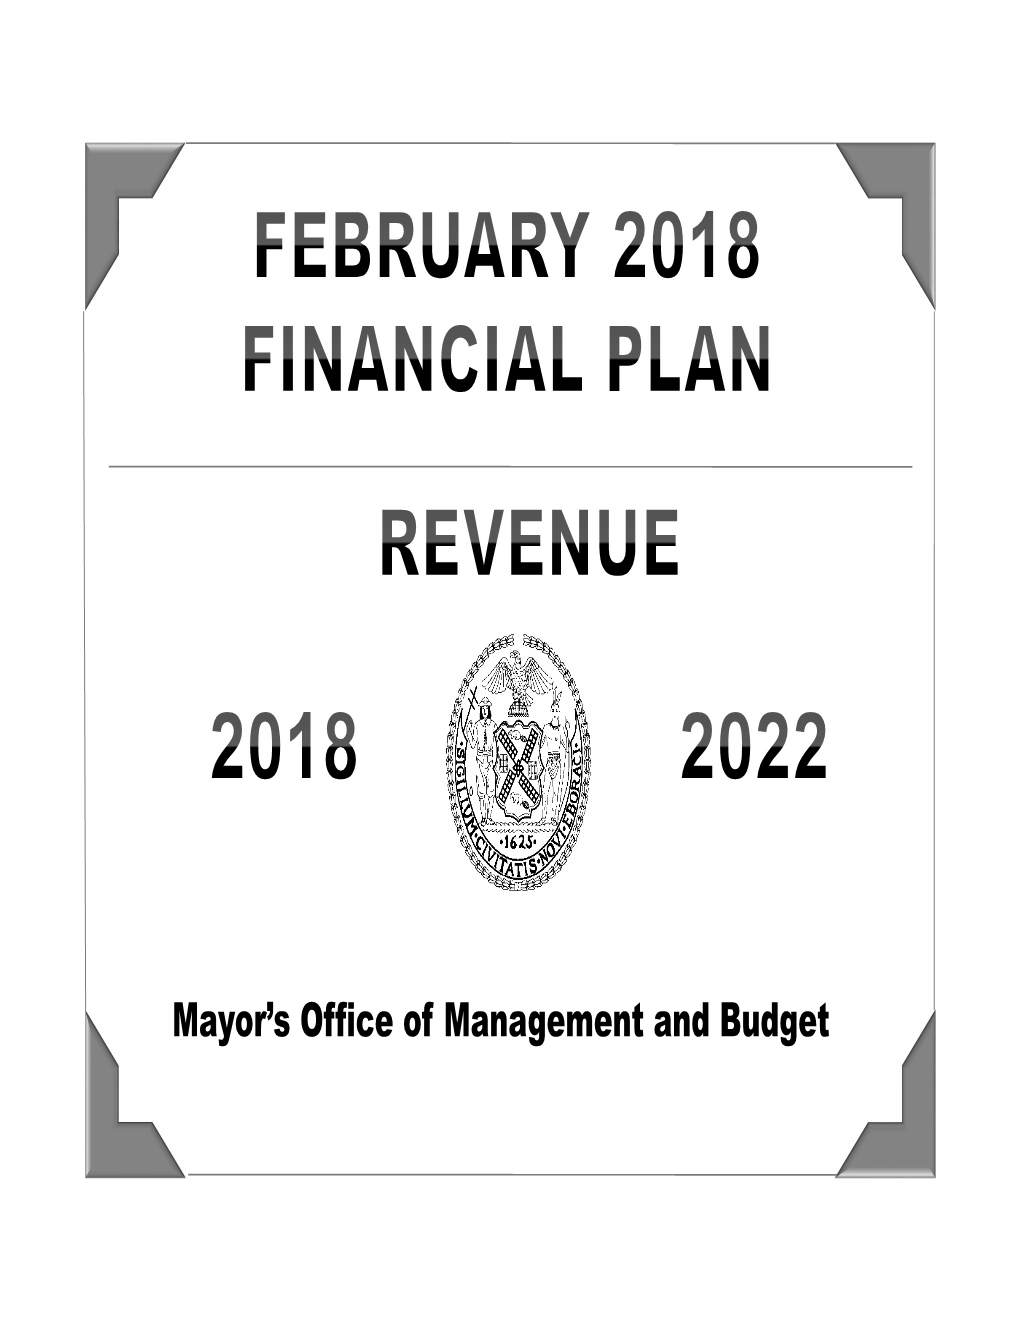 Revenue Financial Plan Detail